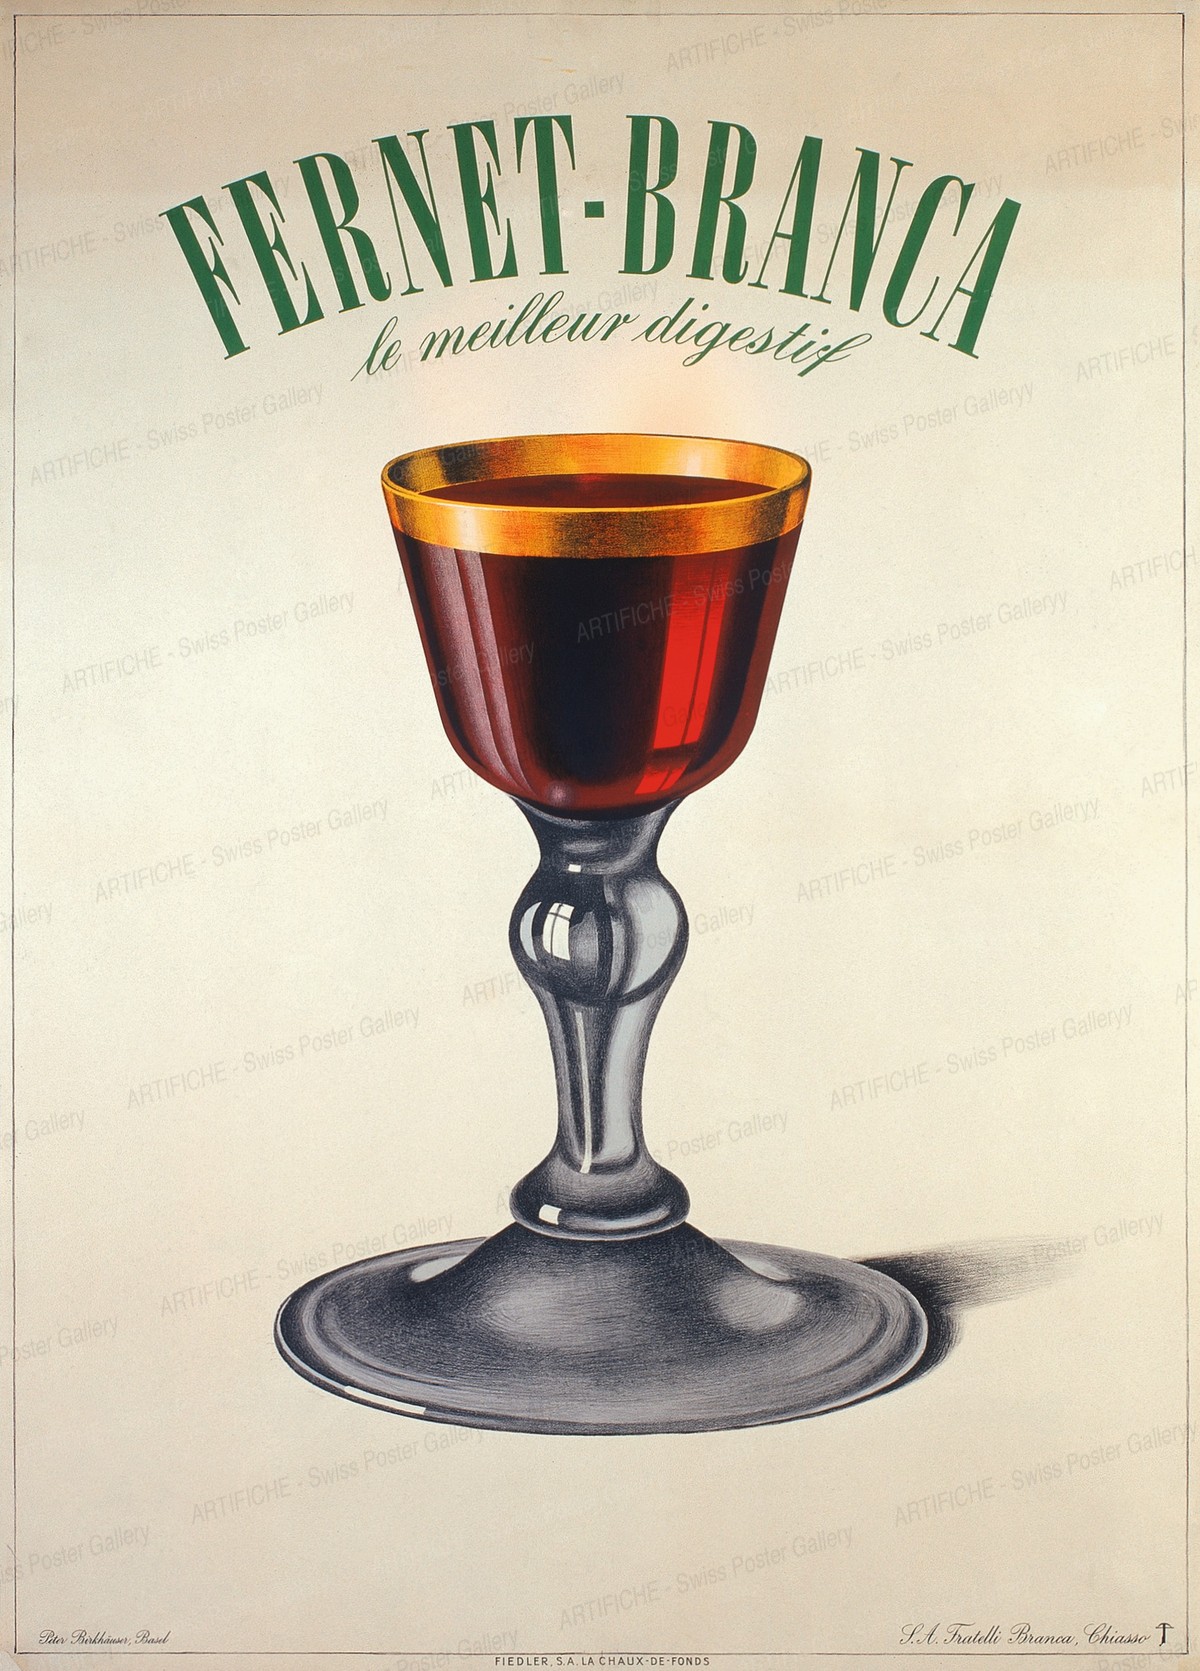 Fernet Branca – le meilleur digestif, Peter Birkhäuser